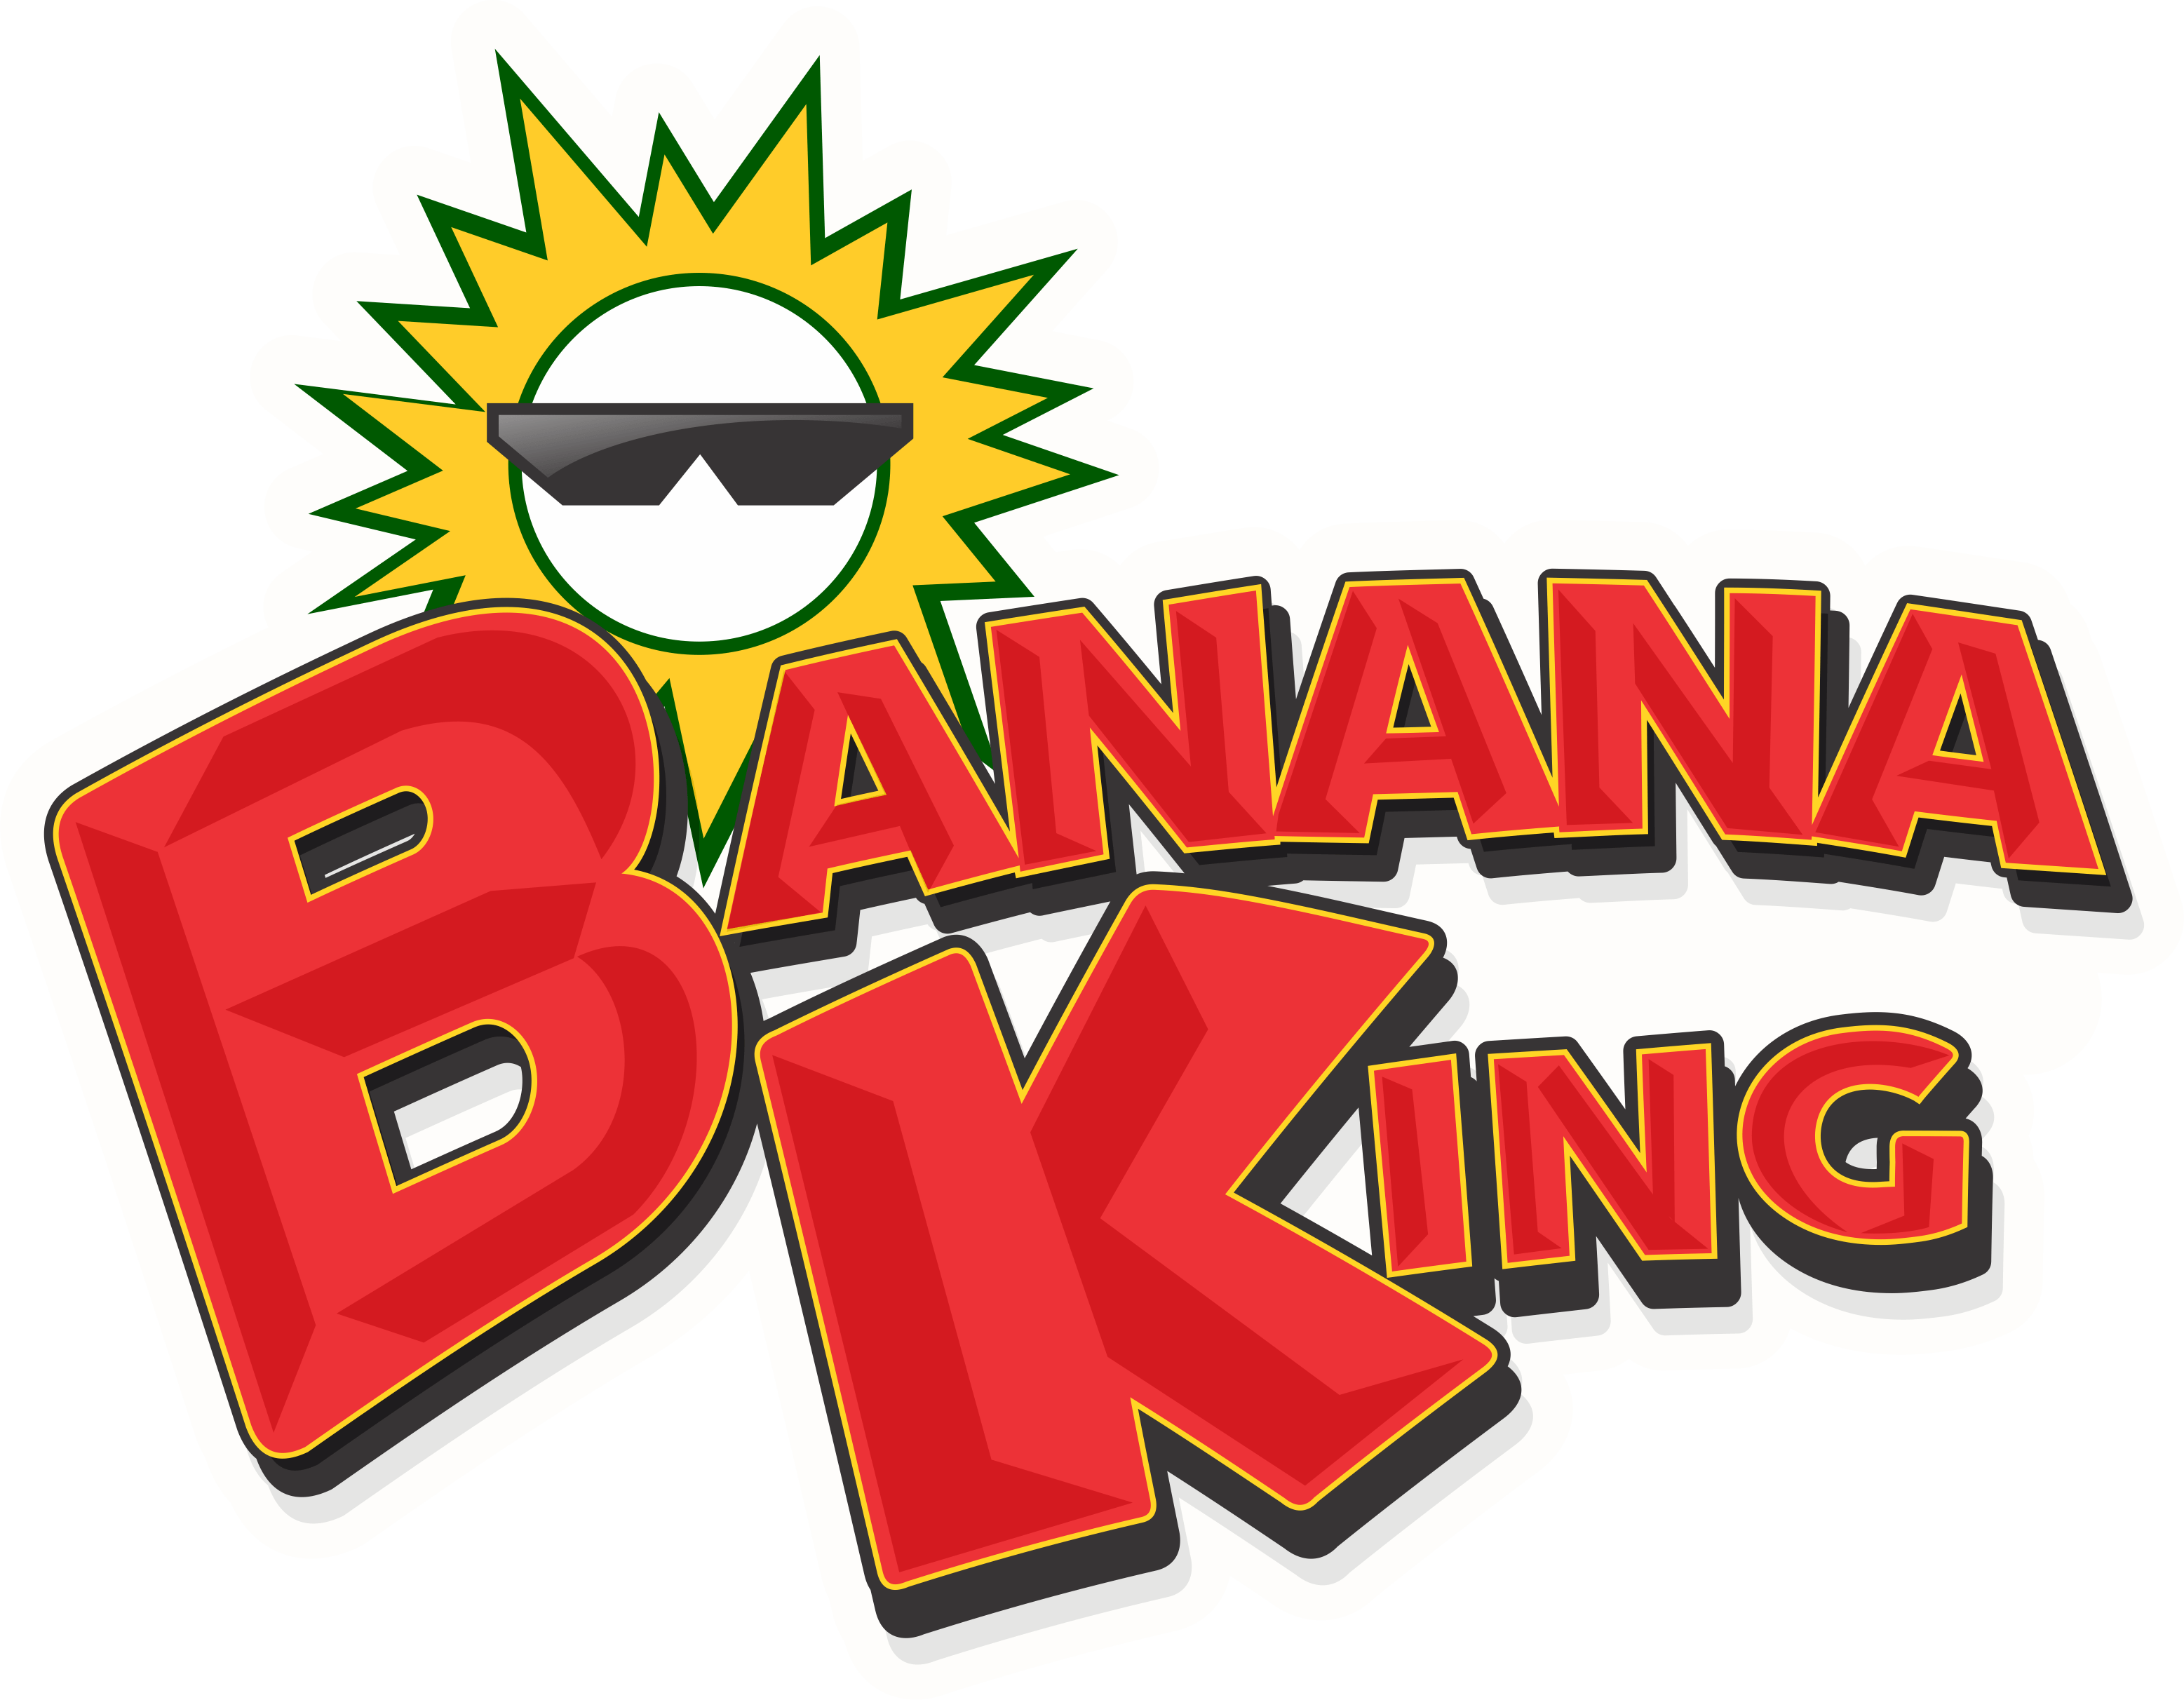 Barnana Logo - Banana King Corp – The Best Latin Fast Food